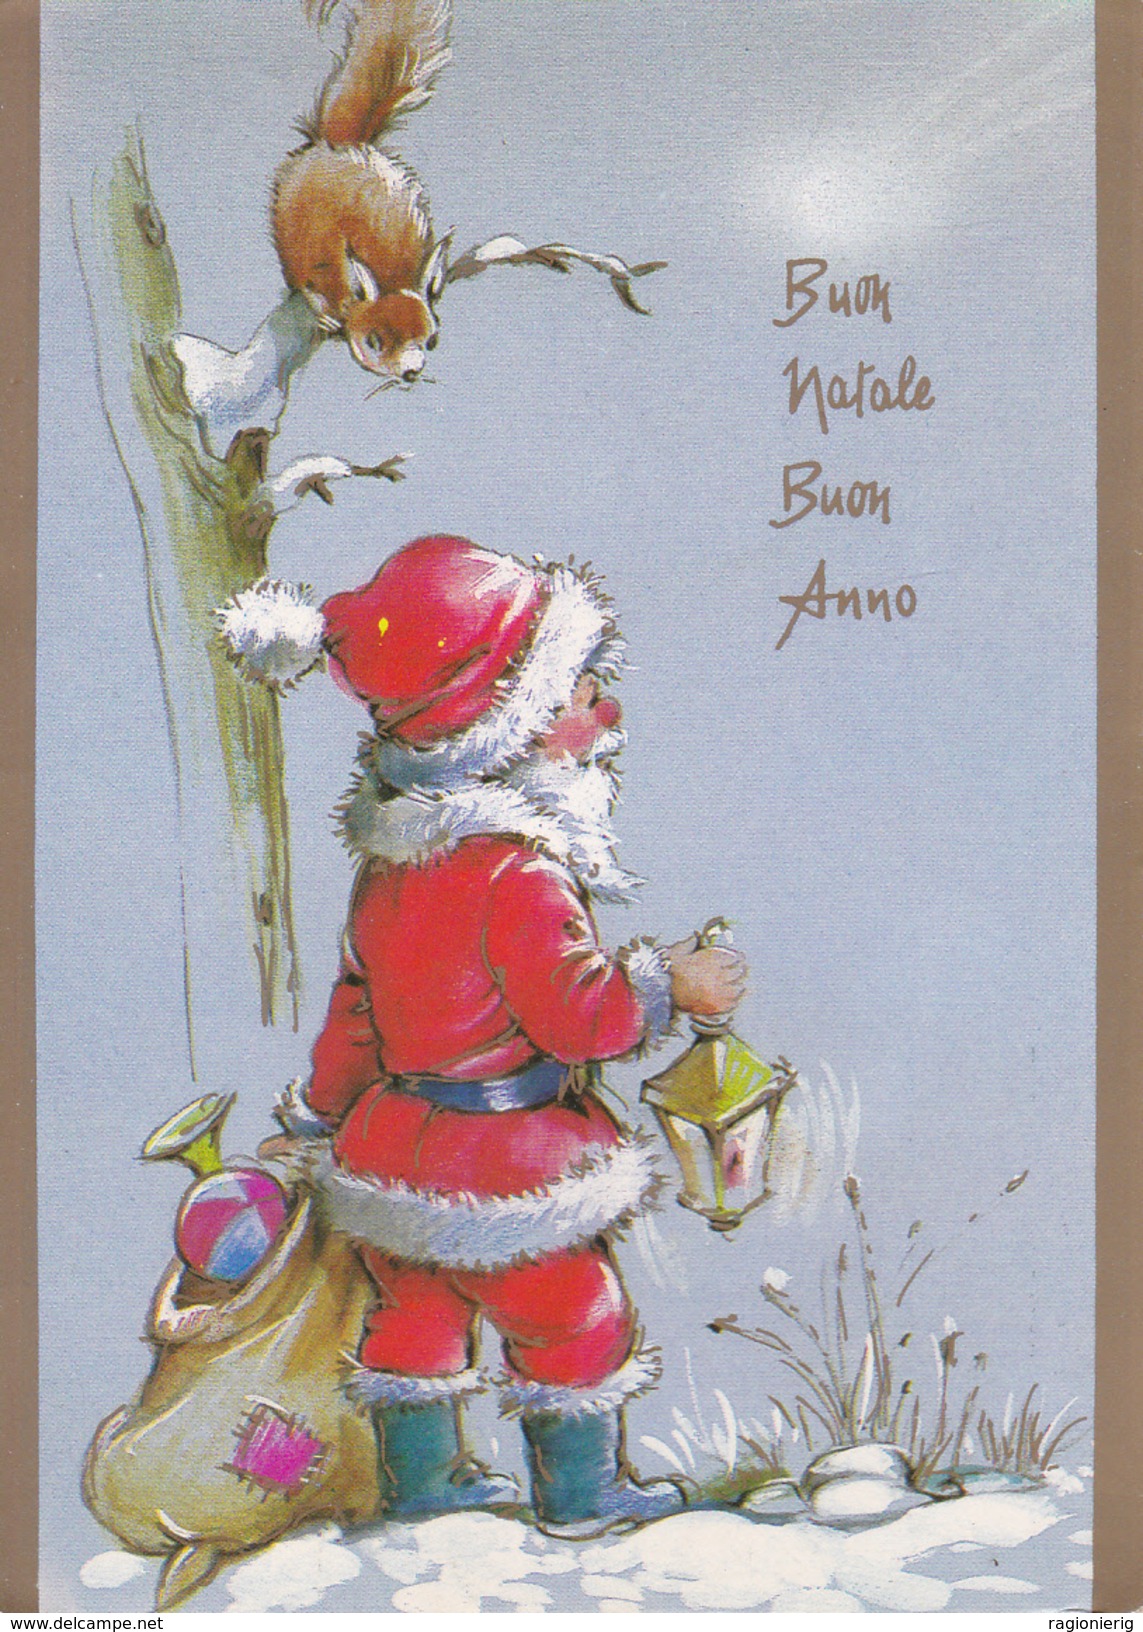 AUGURI - Buon Natale E Buon Anno - Joyeux Noël - Merry Christmas & Good Year - Babbo Natale - Santa Claus - Scoiattolo - Santa Claus